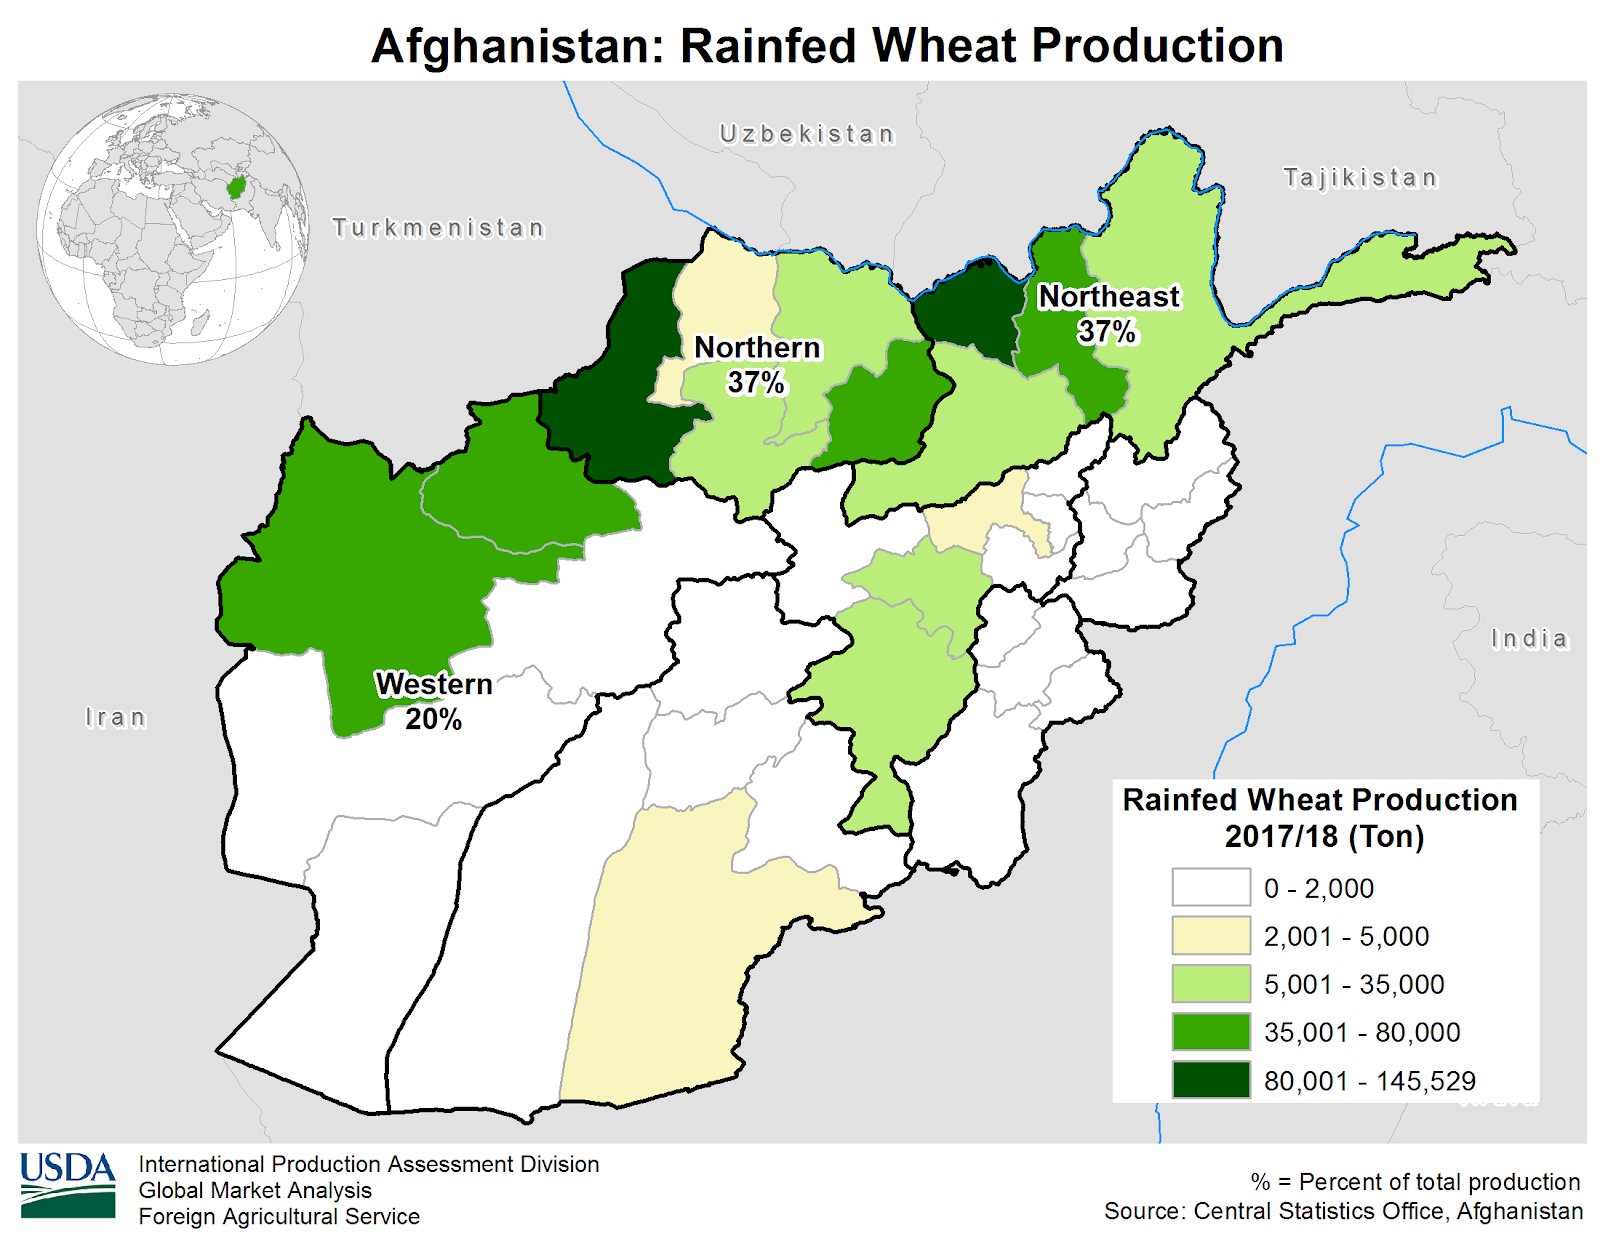 https://ipad.fas.usda.gov/countrysummary/images/AF/seasonalmap/Afghan_Prod_Rainfed_Wheat.png